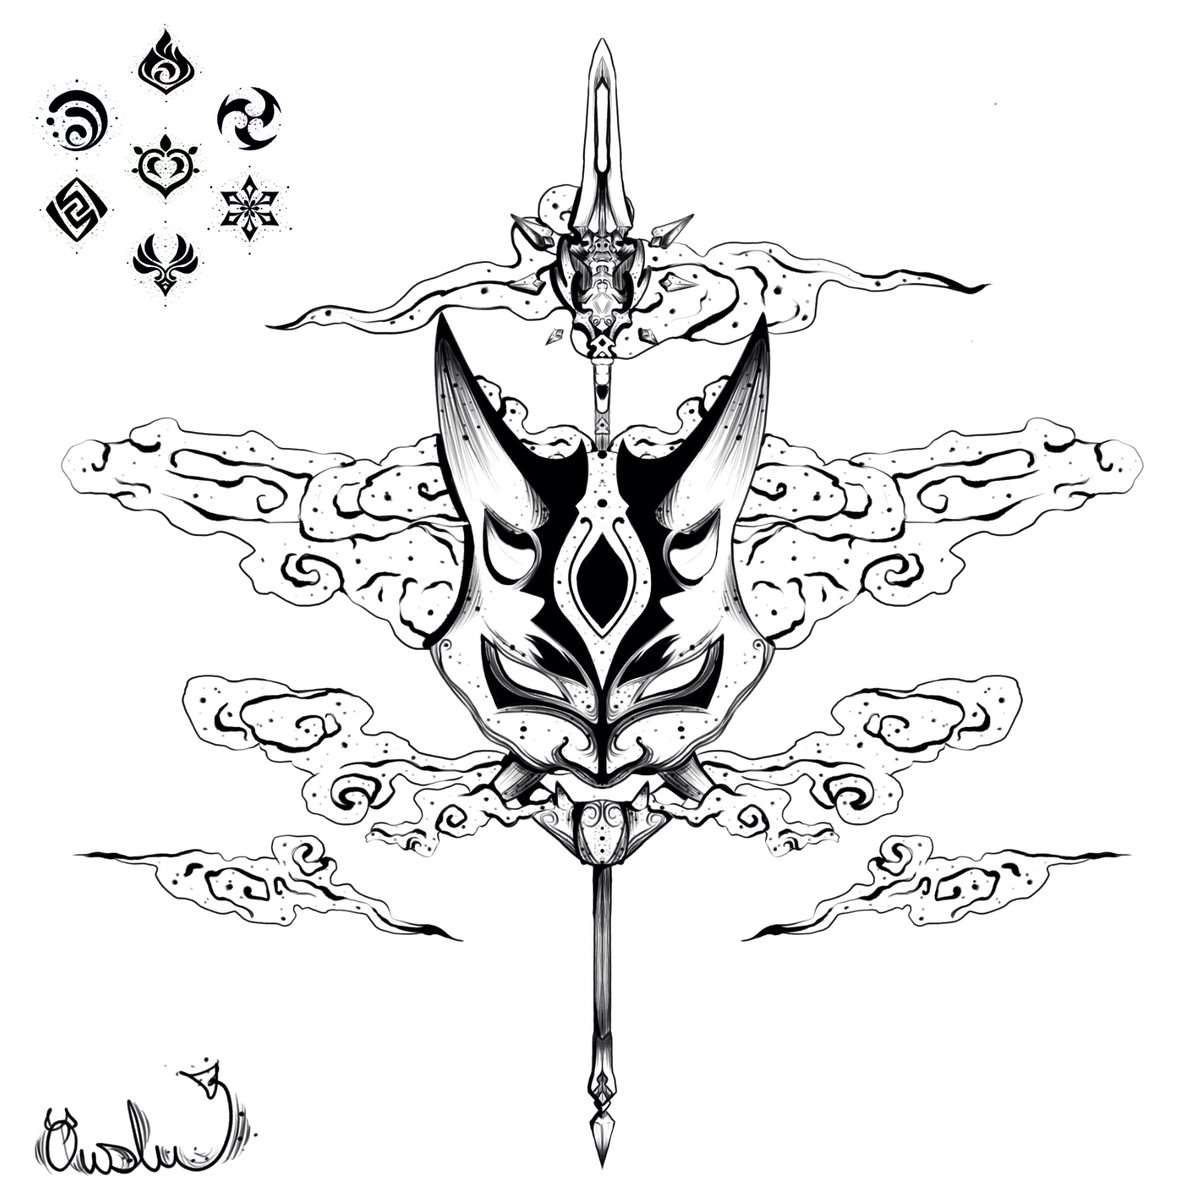 Xiao's mask & weapon #genshinimpact #xiao #genshin #art #genshinart #geo #hydro #electro #kryo #pyro #dendro #anemo #artist #tattoodesign #japanesemask #onimask #tattoosketch #tattooinspiration #drawing #yōkai #Genshinlmpact #xiaogenshin